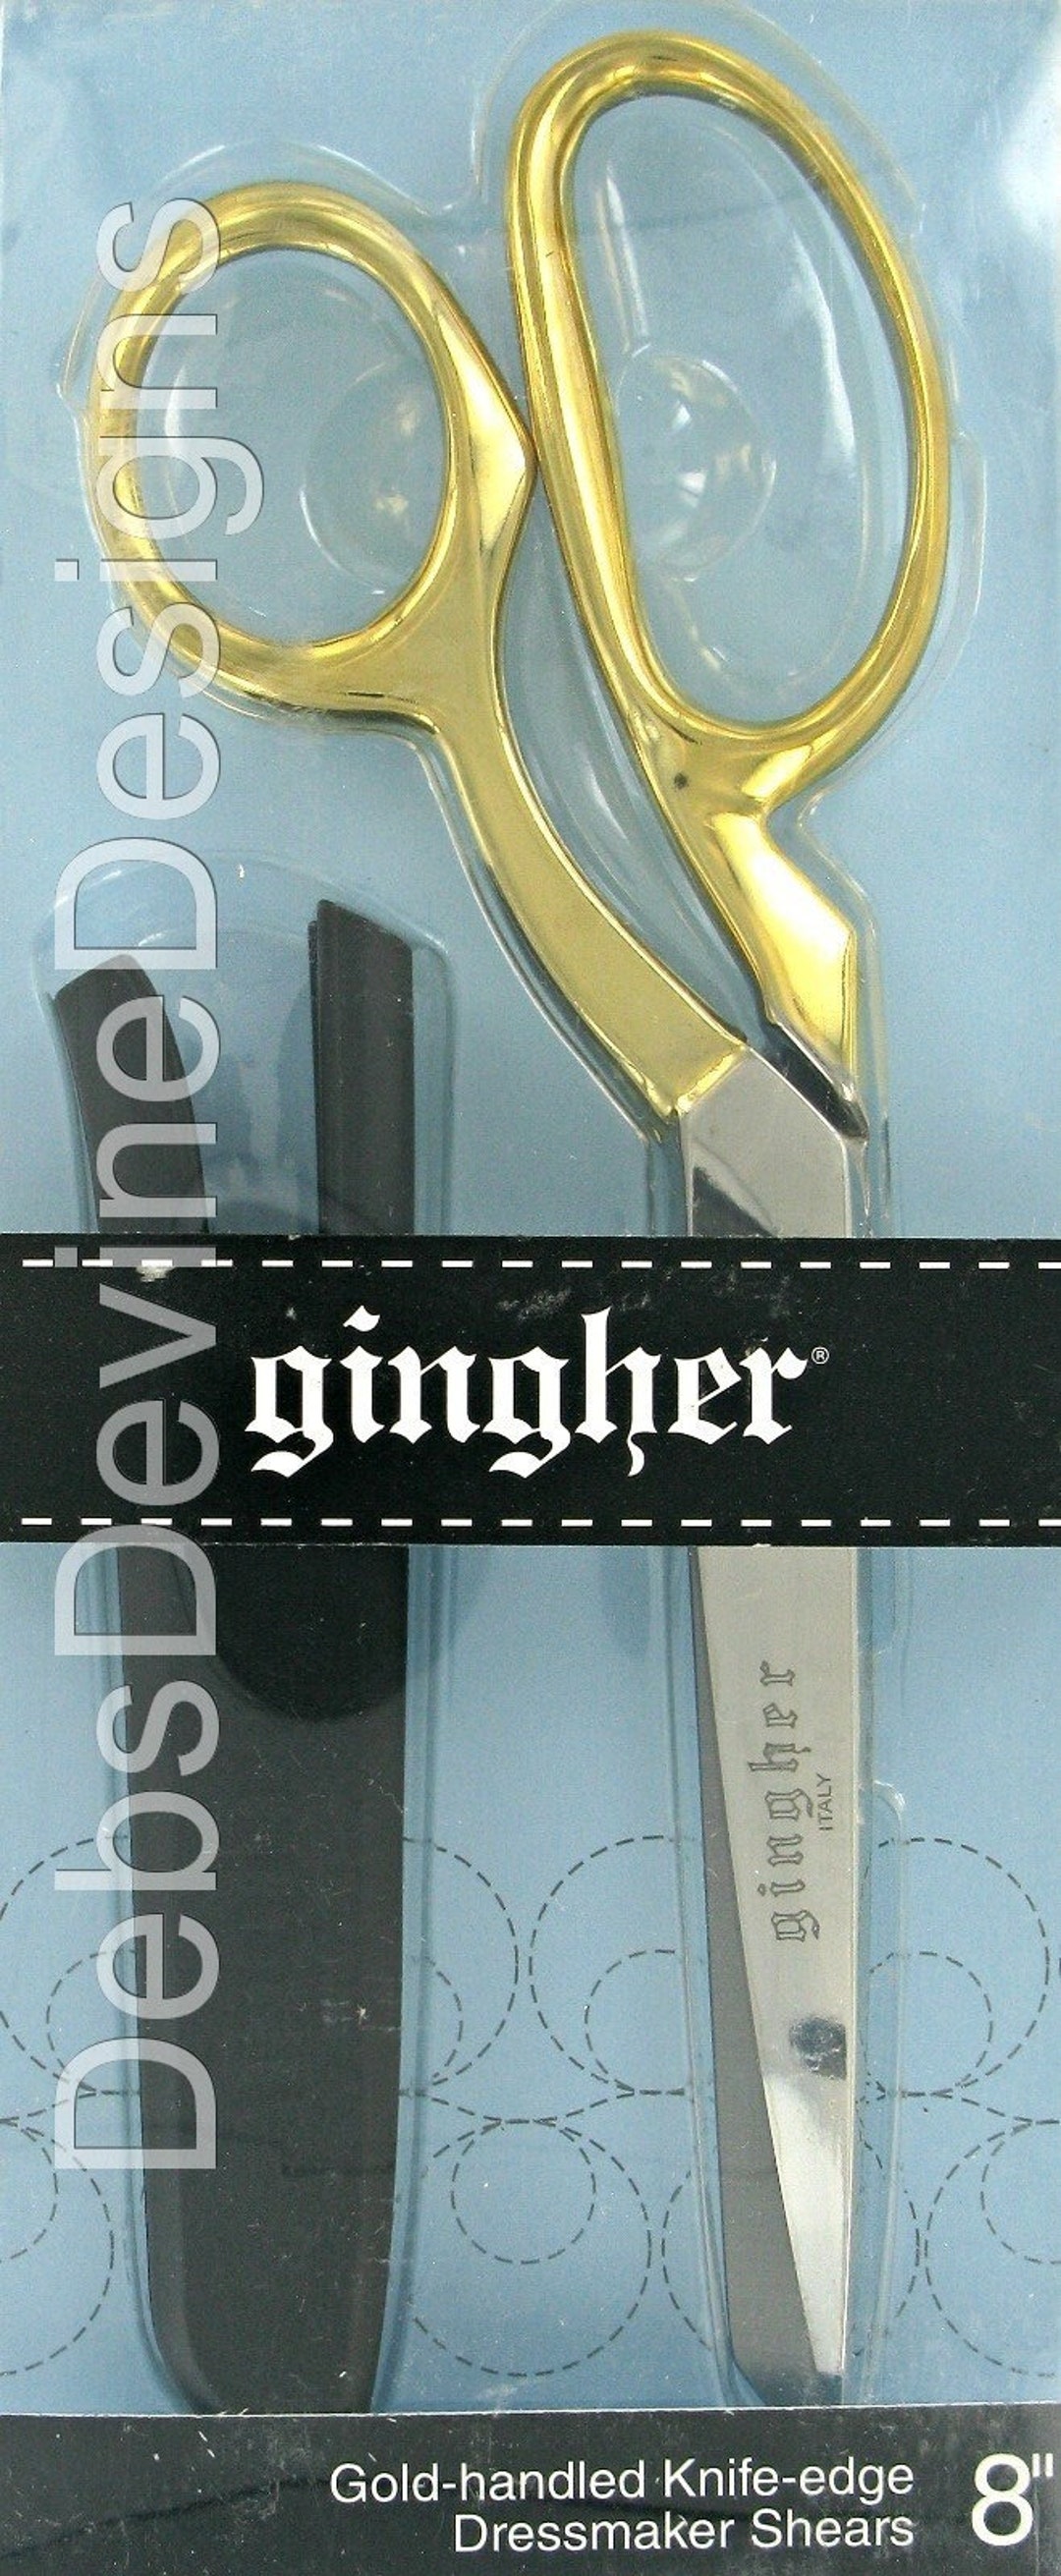 Gingher- 8in Knife Edge Dressmakers Shears, Designers Series: Rynn